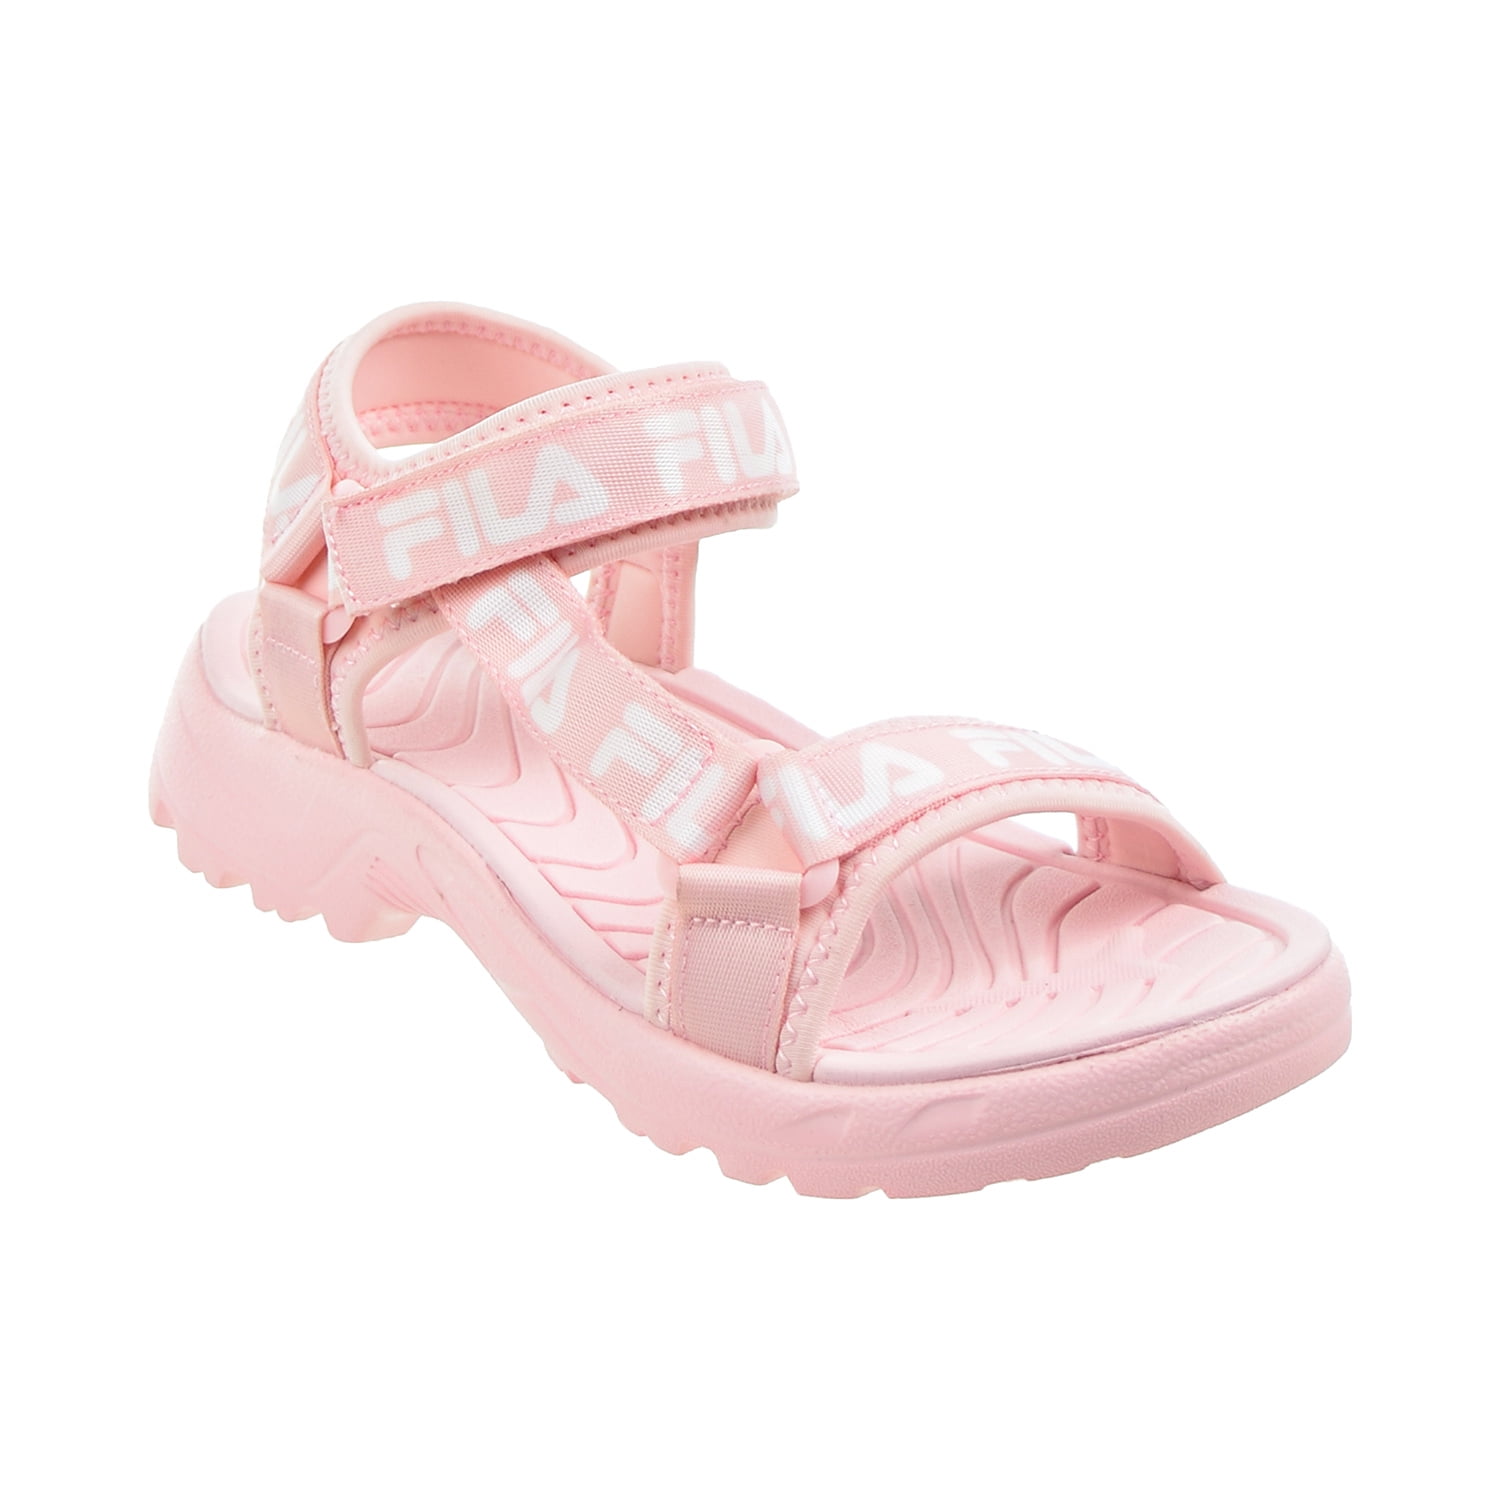 Fila Alteration Strap Women's Sandals Pink-White 5sm00524-661 - Walmart.com